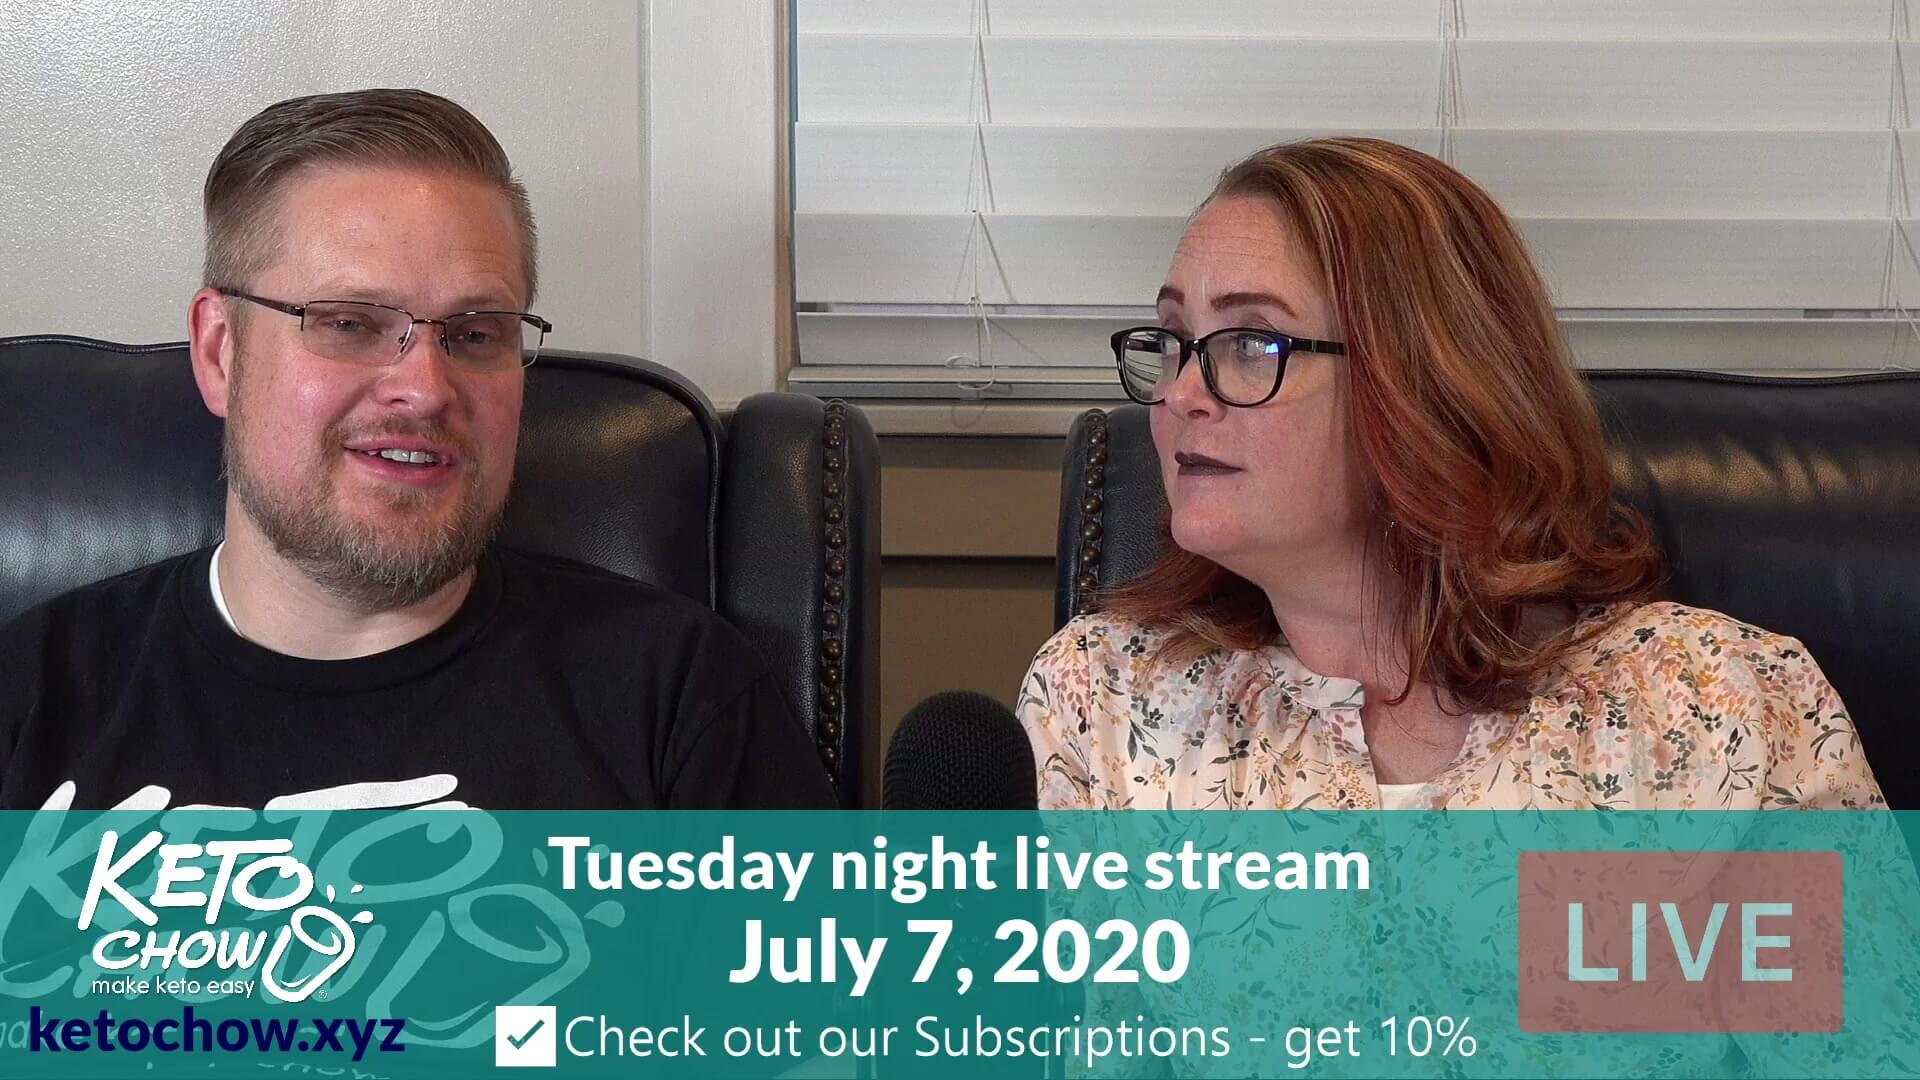 July 7 Live stream